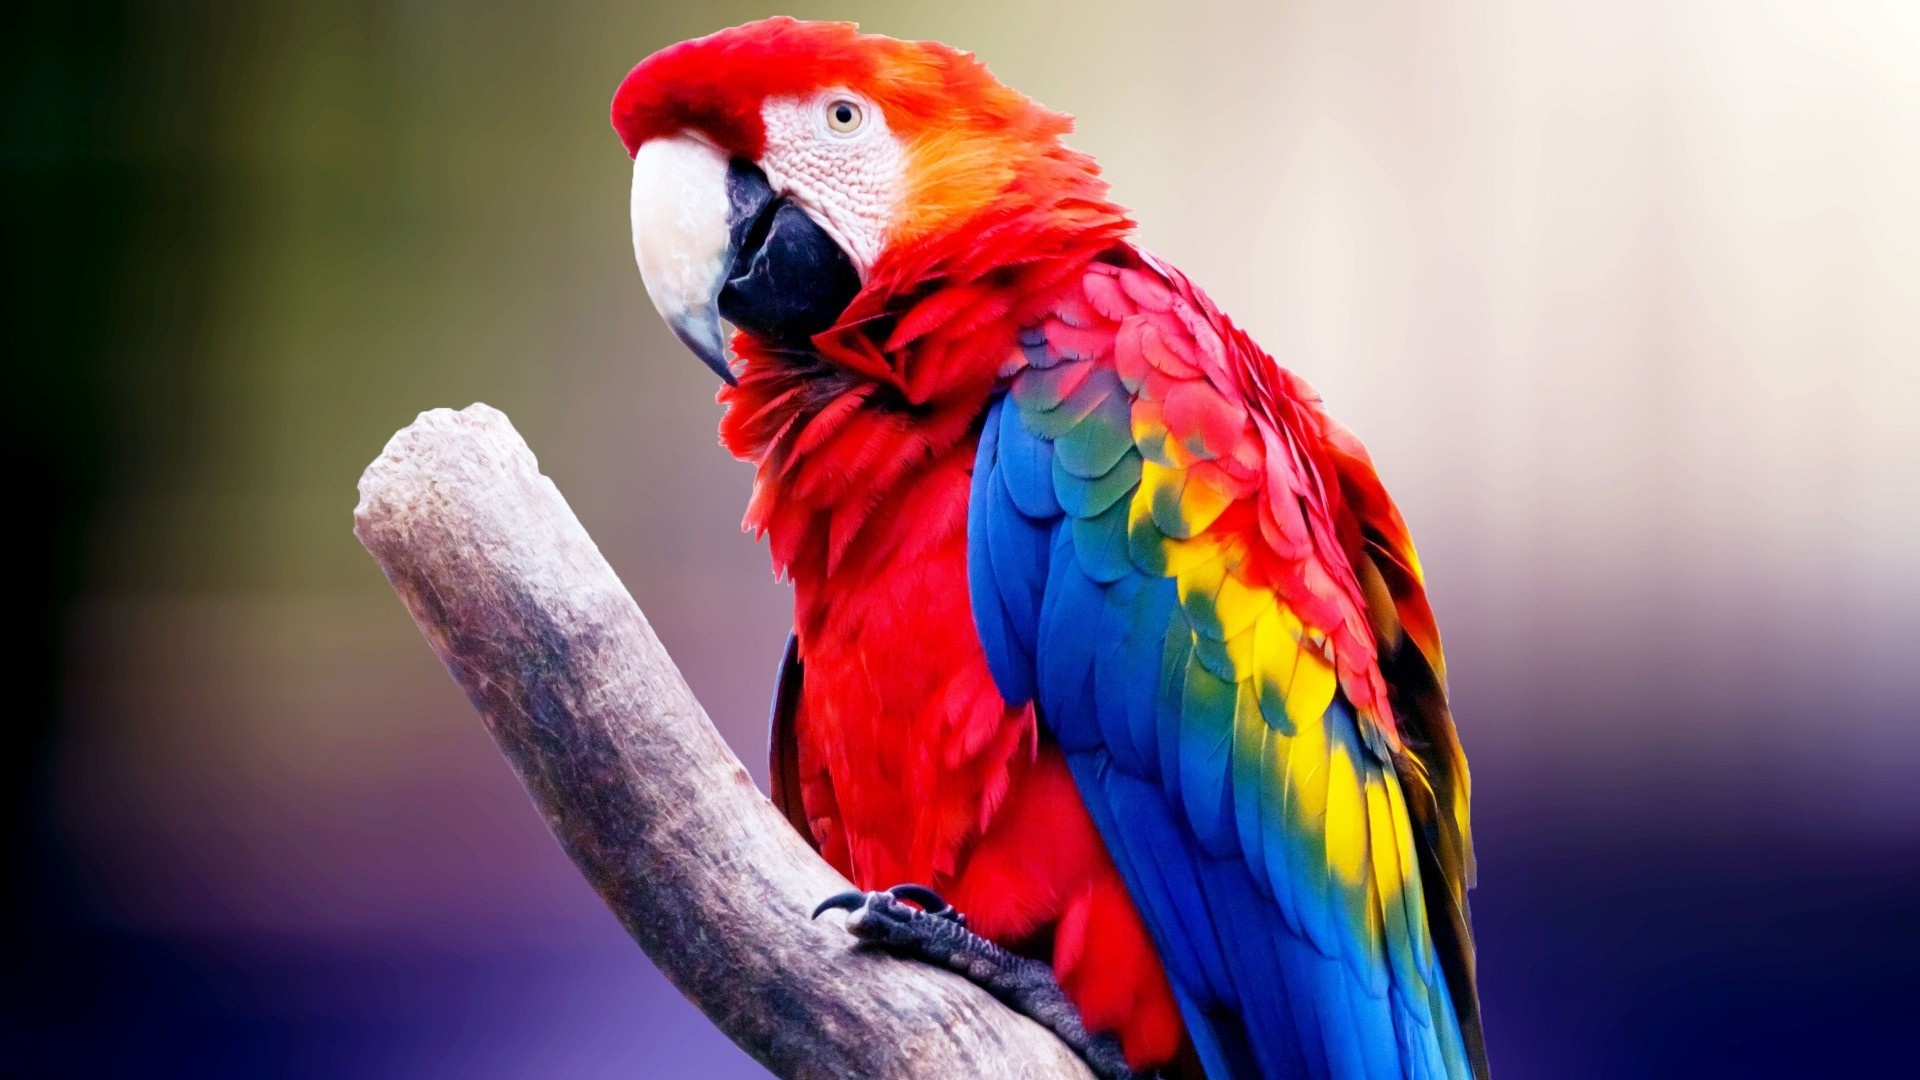 Colorful Bird wallpaper hd